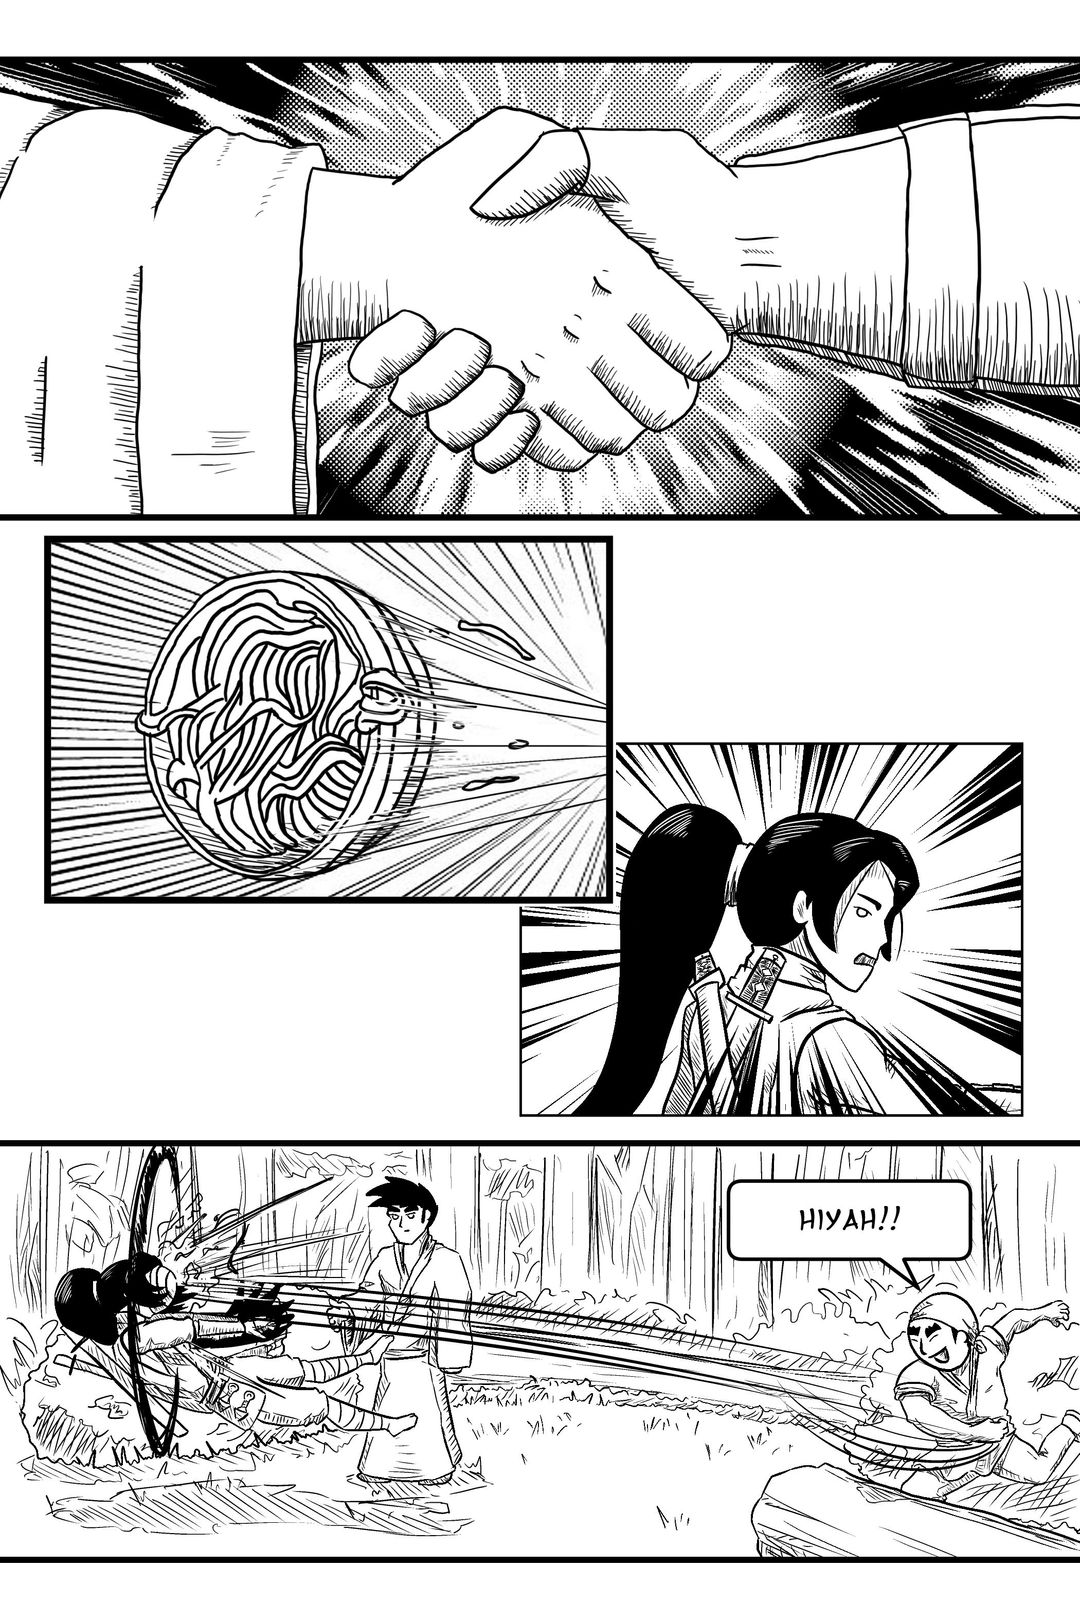 Shotgun Samurai 05 panel 5